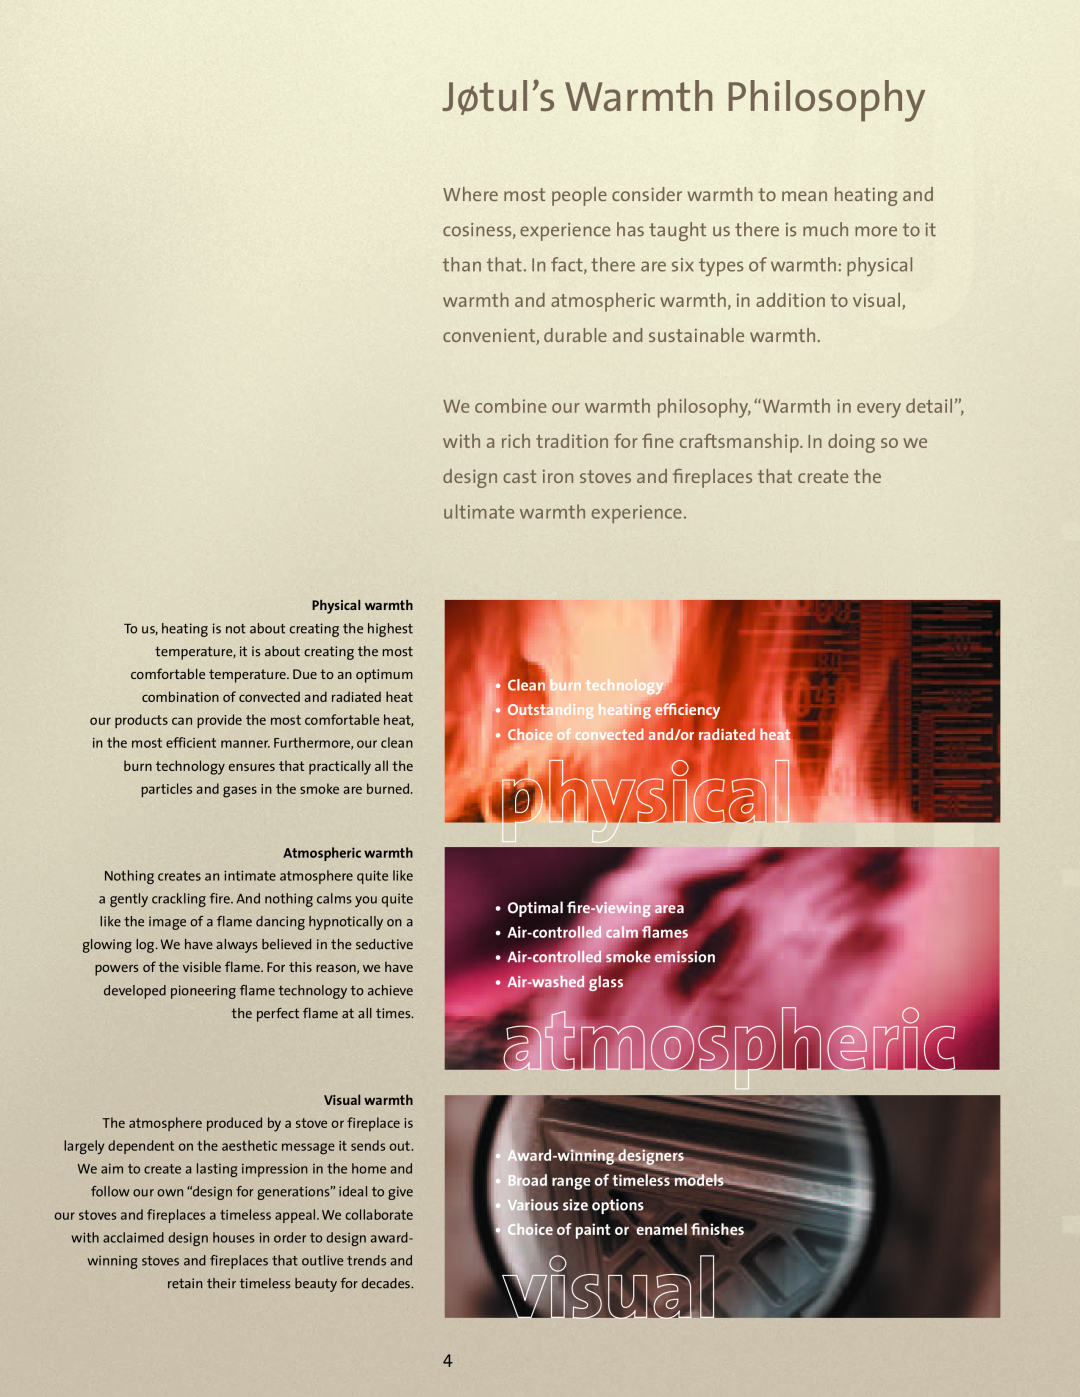 Jotul Gas Inserts and Fireplaces brochure Jøtul’s Warmth Philosophy 